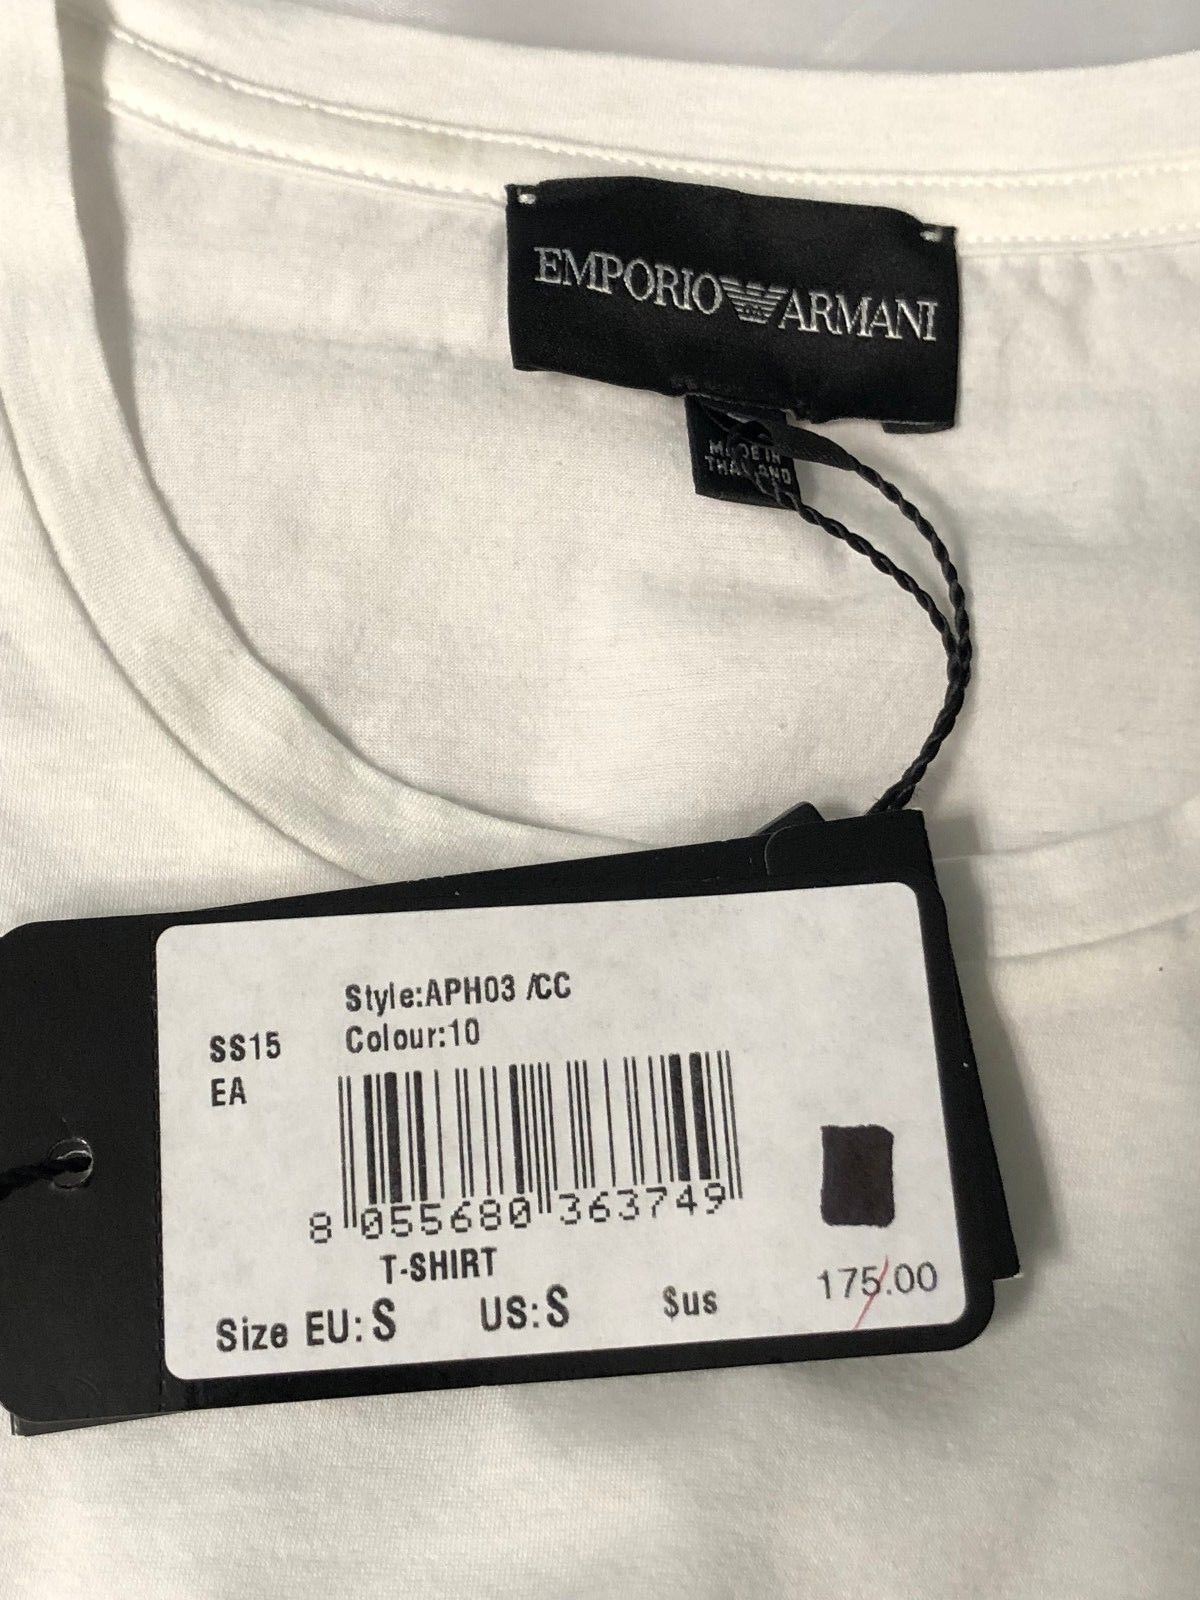 NWT $175 Emporio Armani White Short Sleeve T-Shirt APH03